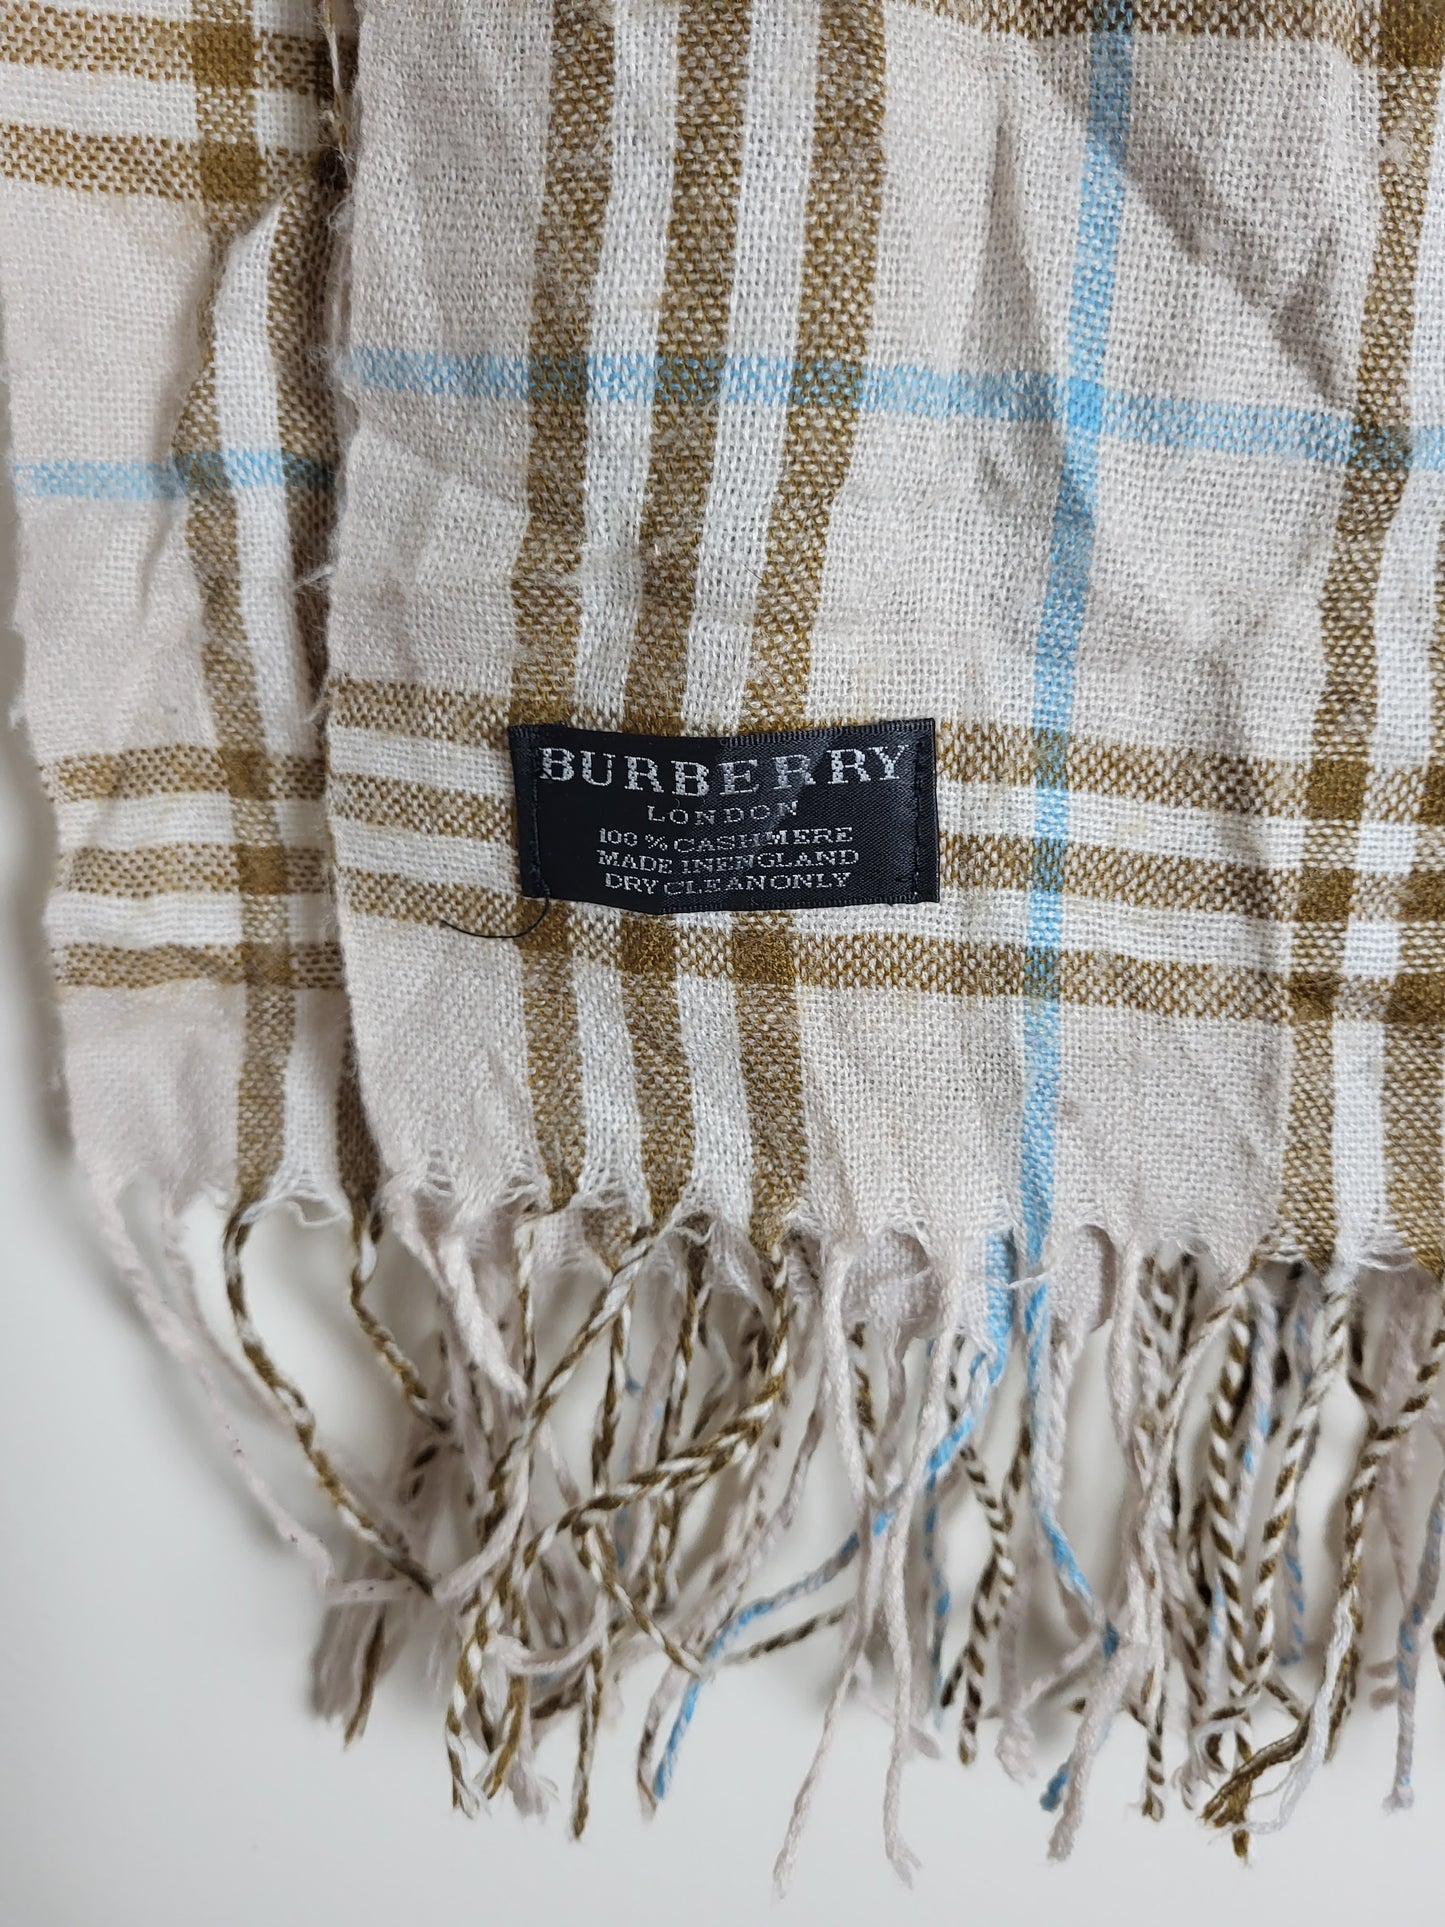 Burberry London - Vintage Schal / Tuch - Beige Tartan- Kaschmir - 160 x 70